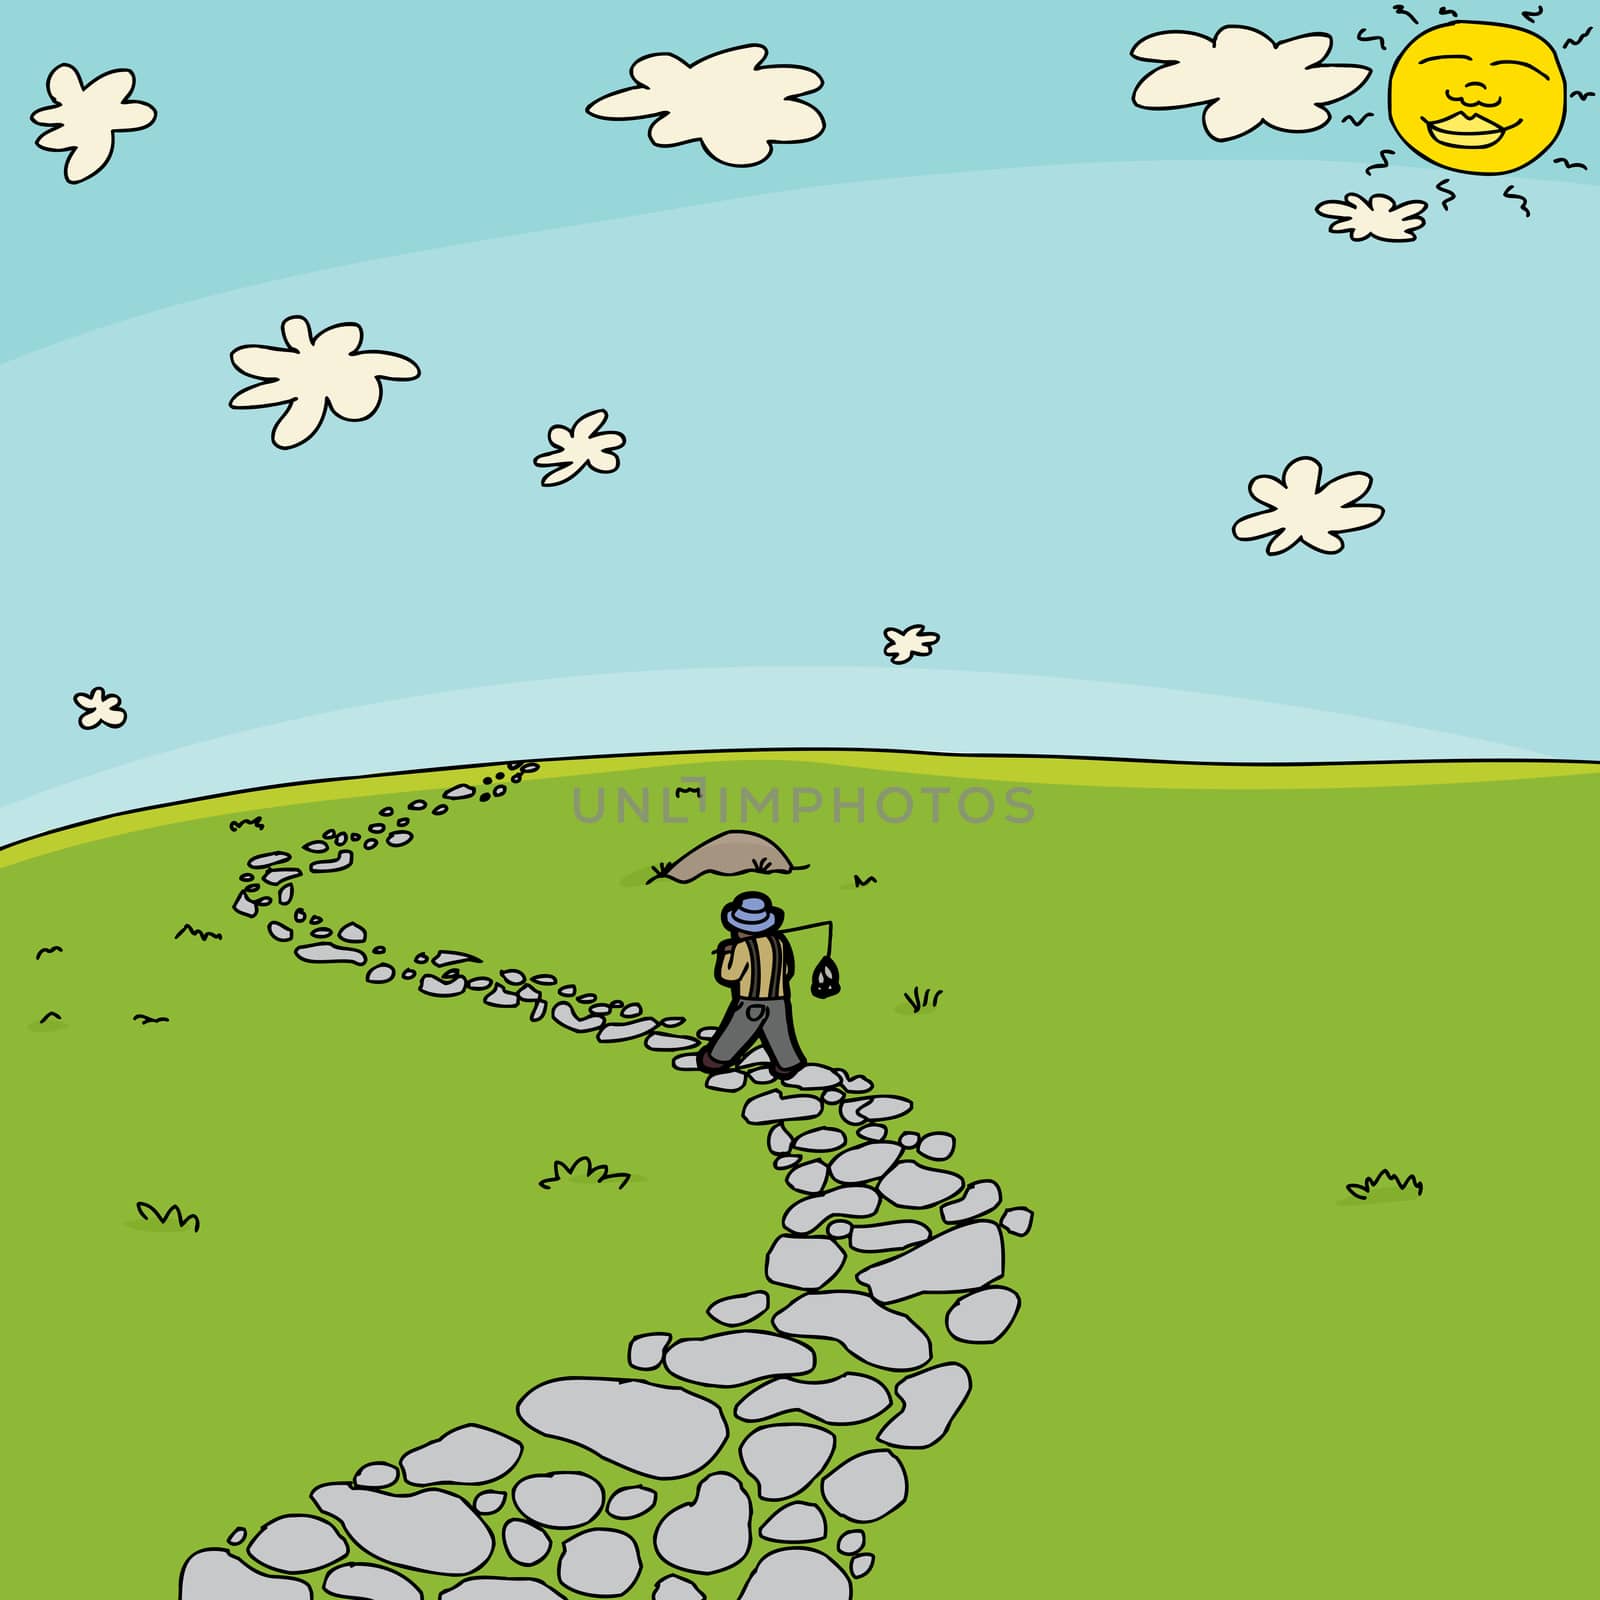 Cartoon landscape background with fisherman walking on stone path